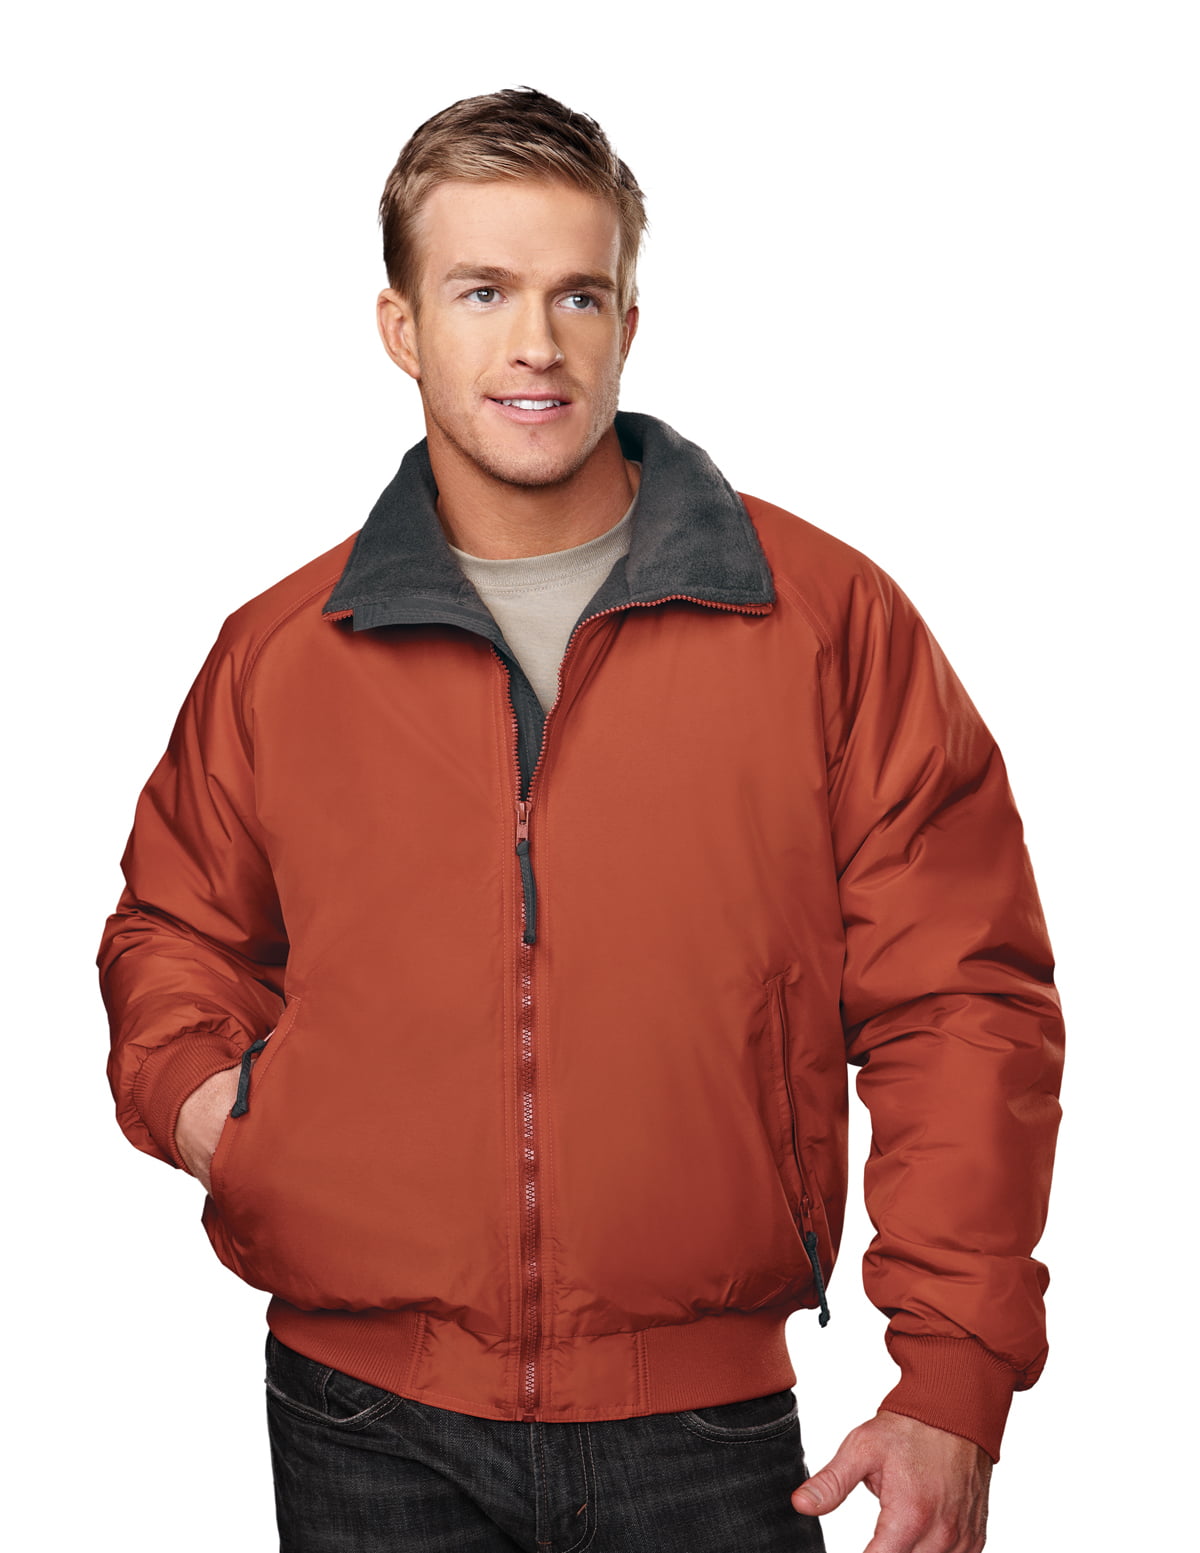 Tri-Mountain Performance 4900 - Canyon hip-length jacket $63.69 